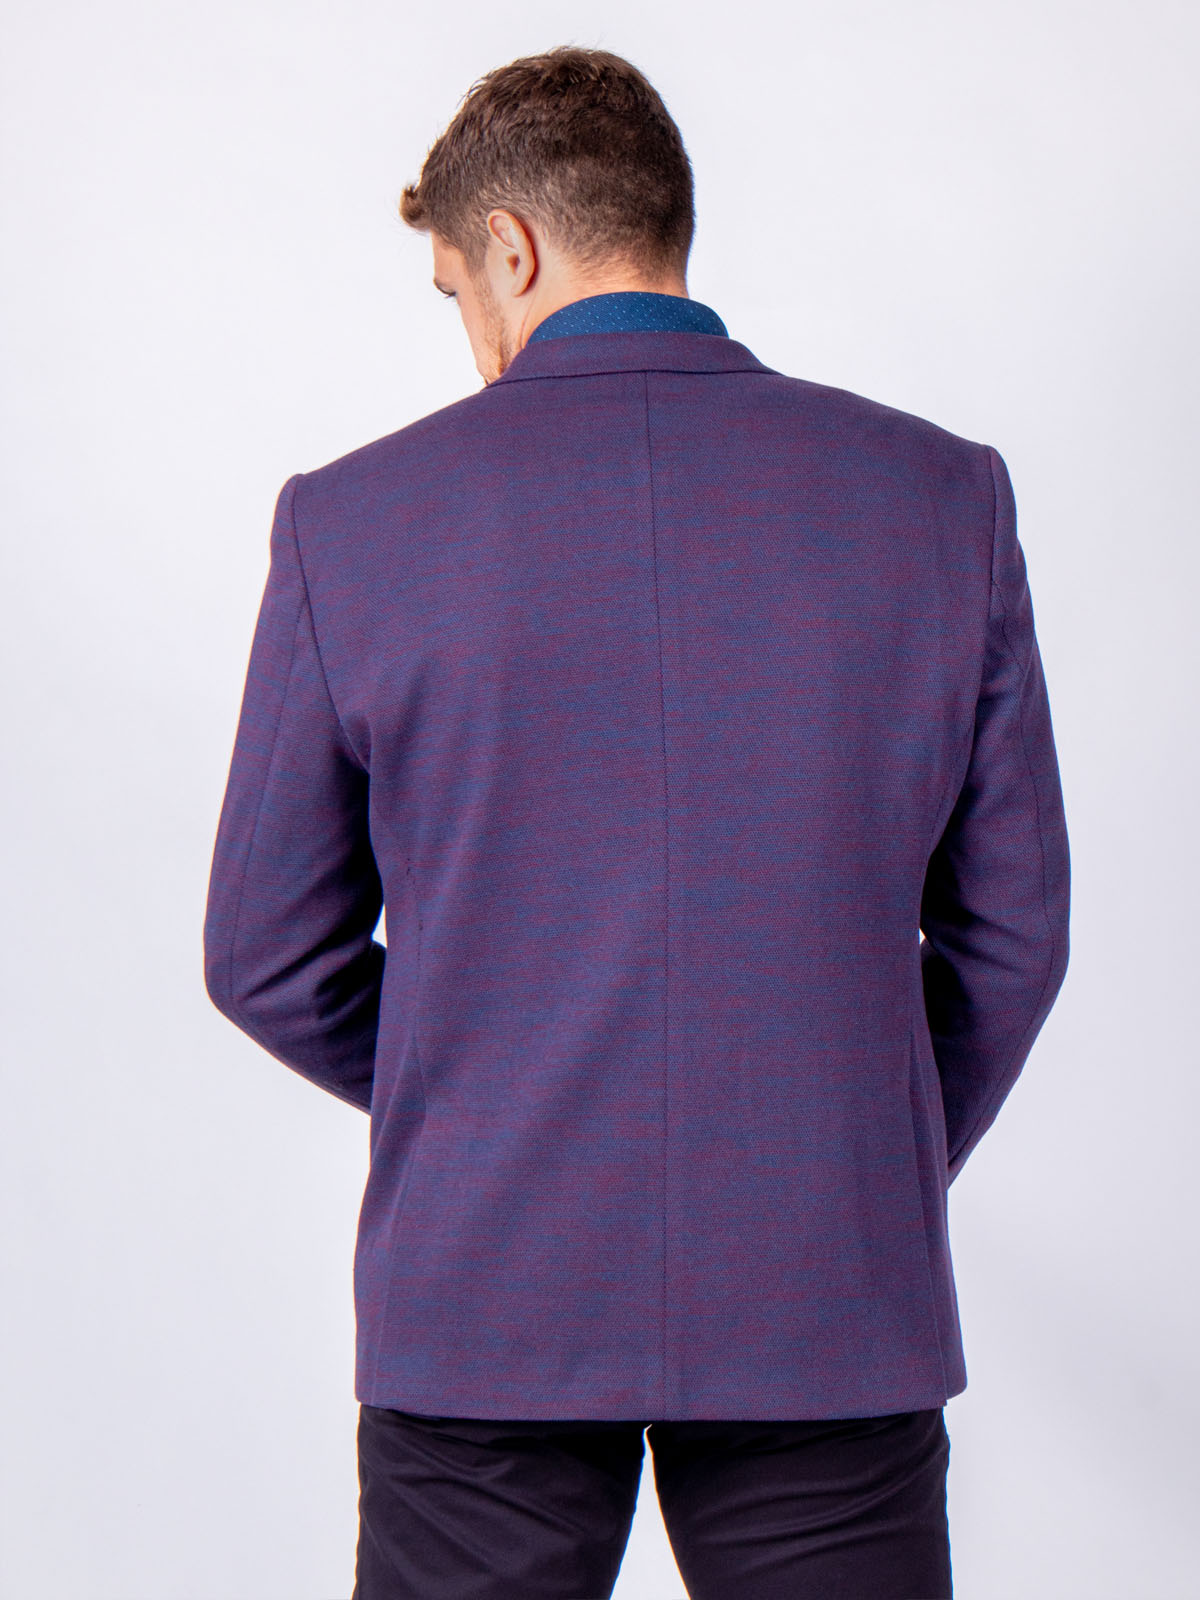 Jacket in burgundy and blue melange - 61080 € 61.30 img3